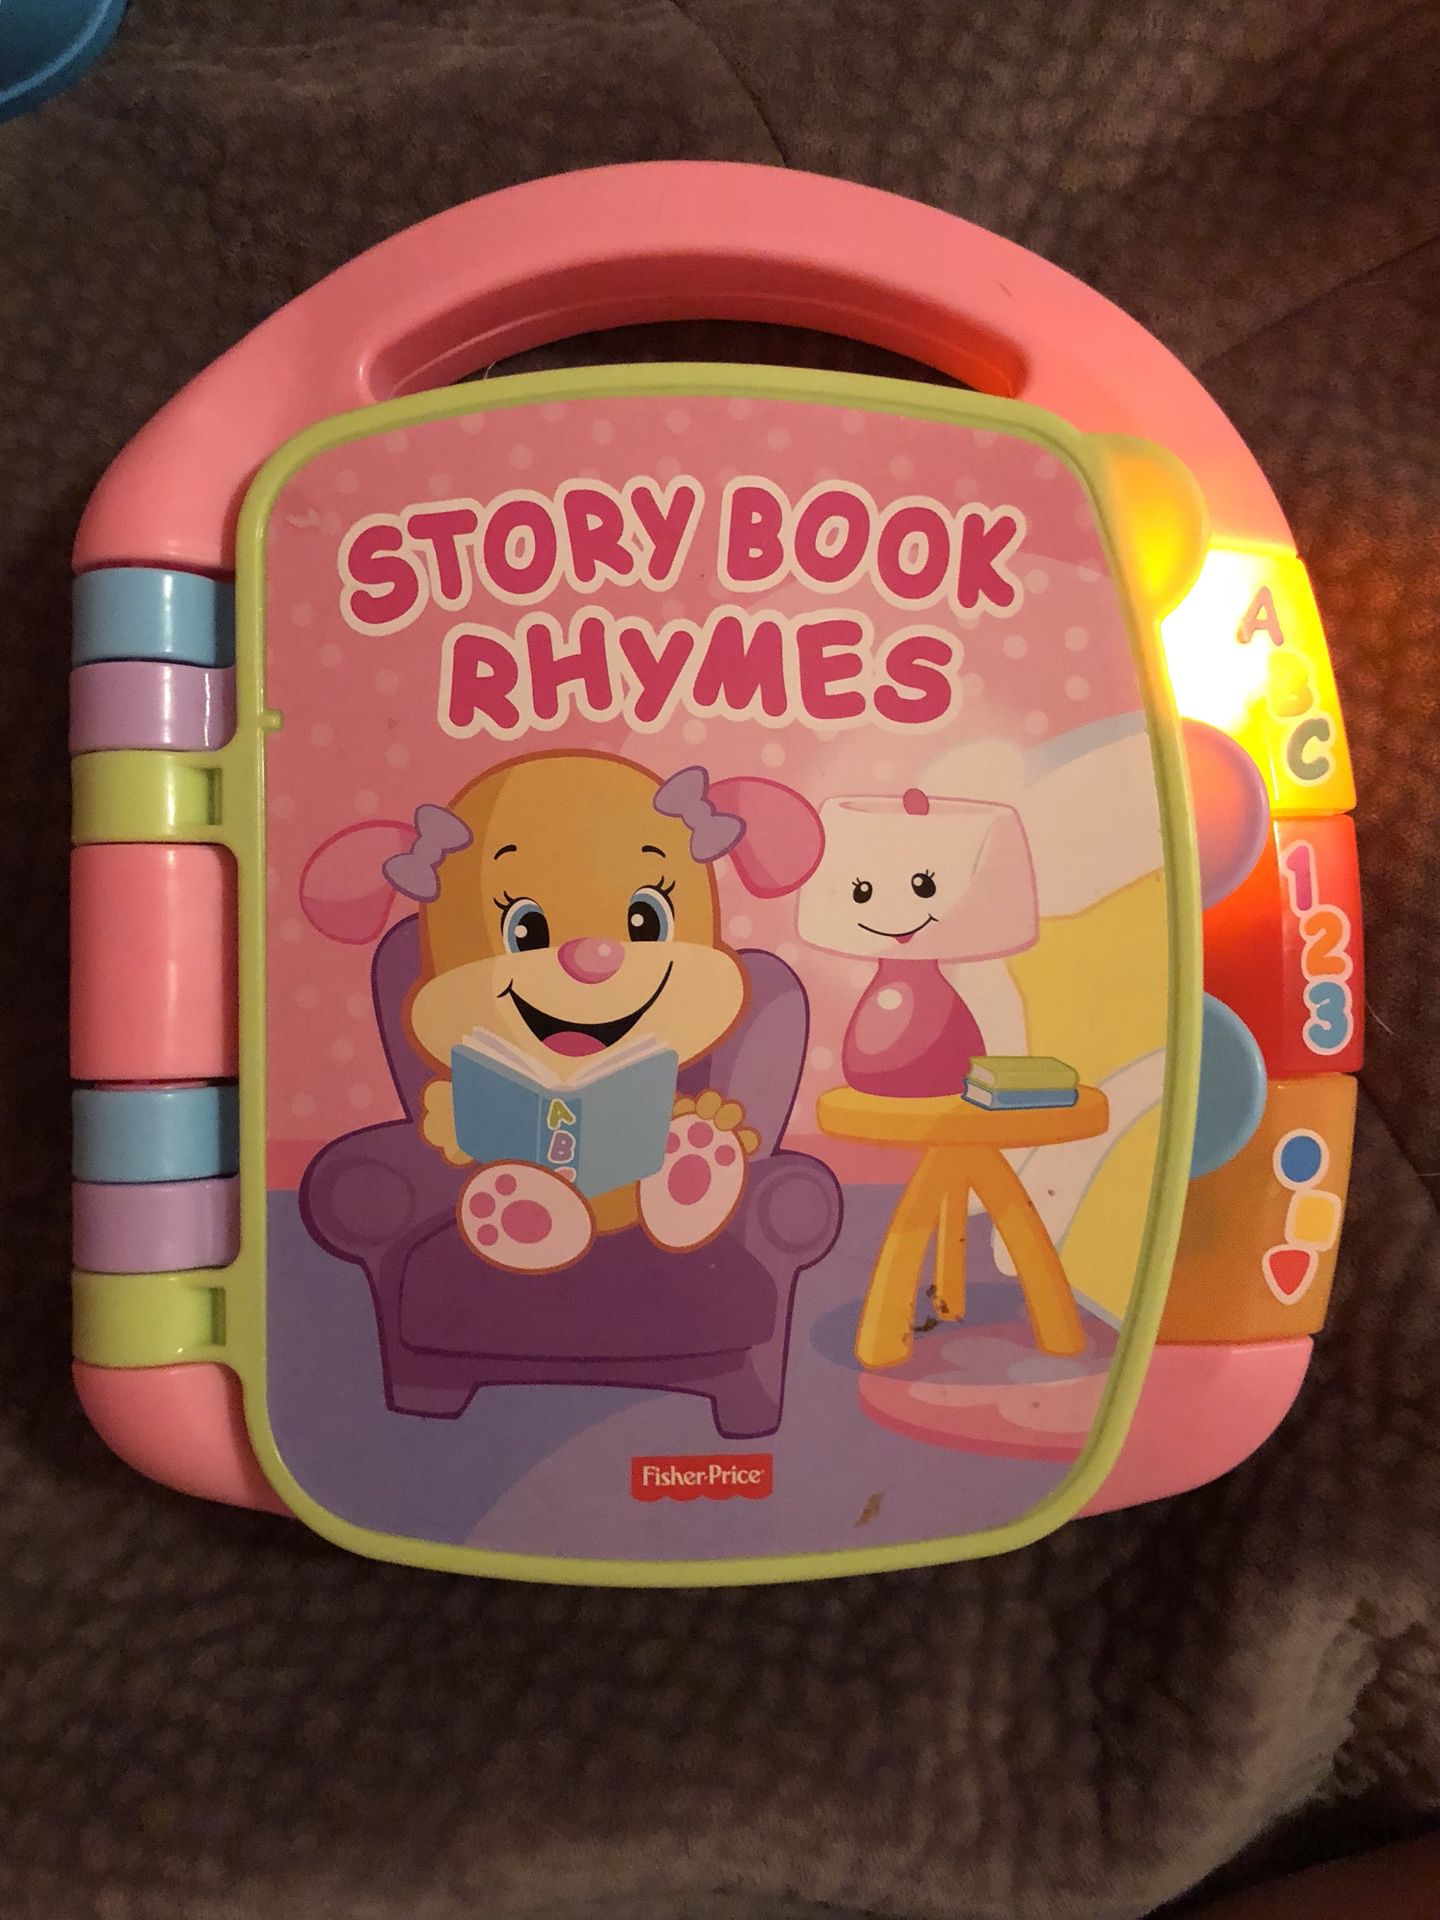 Storybook kids toy